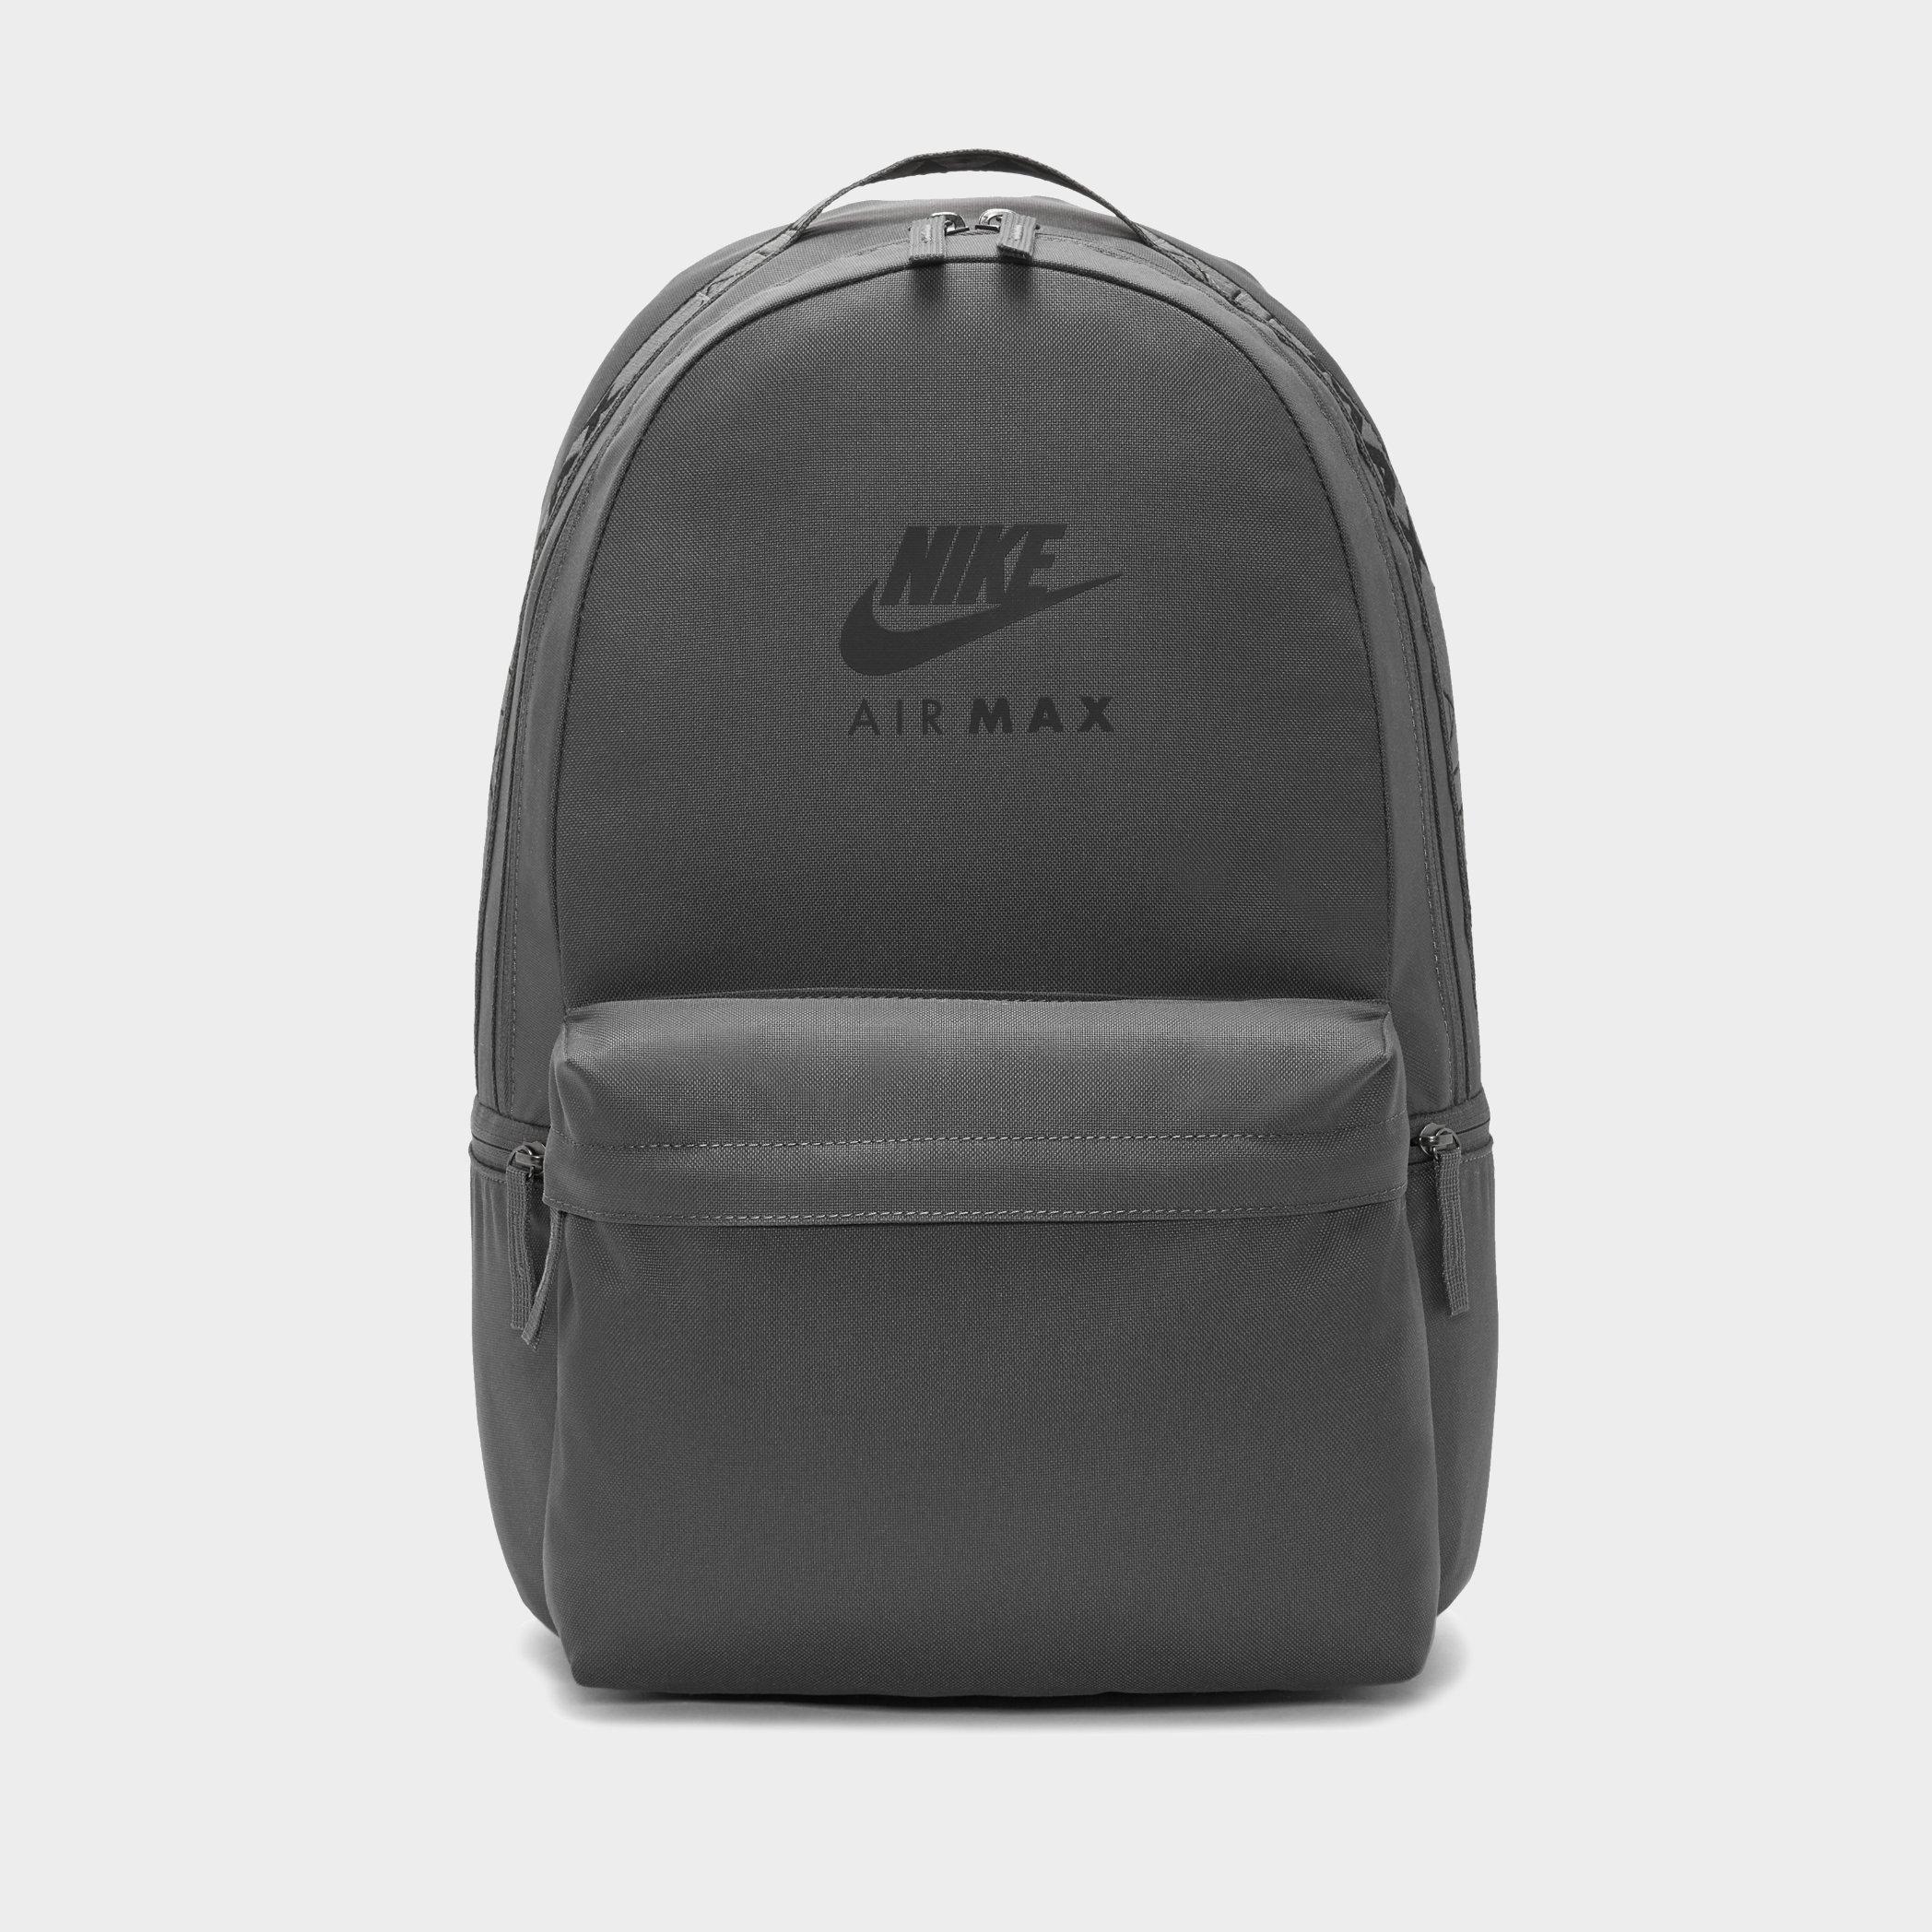 nike backpacks online offers